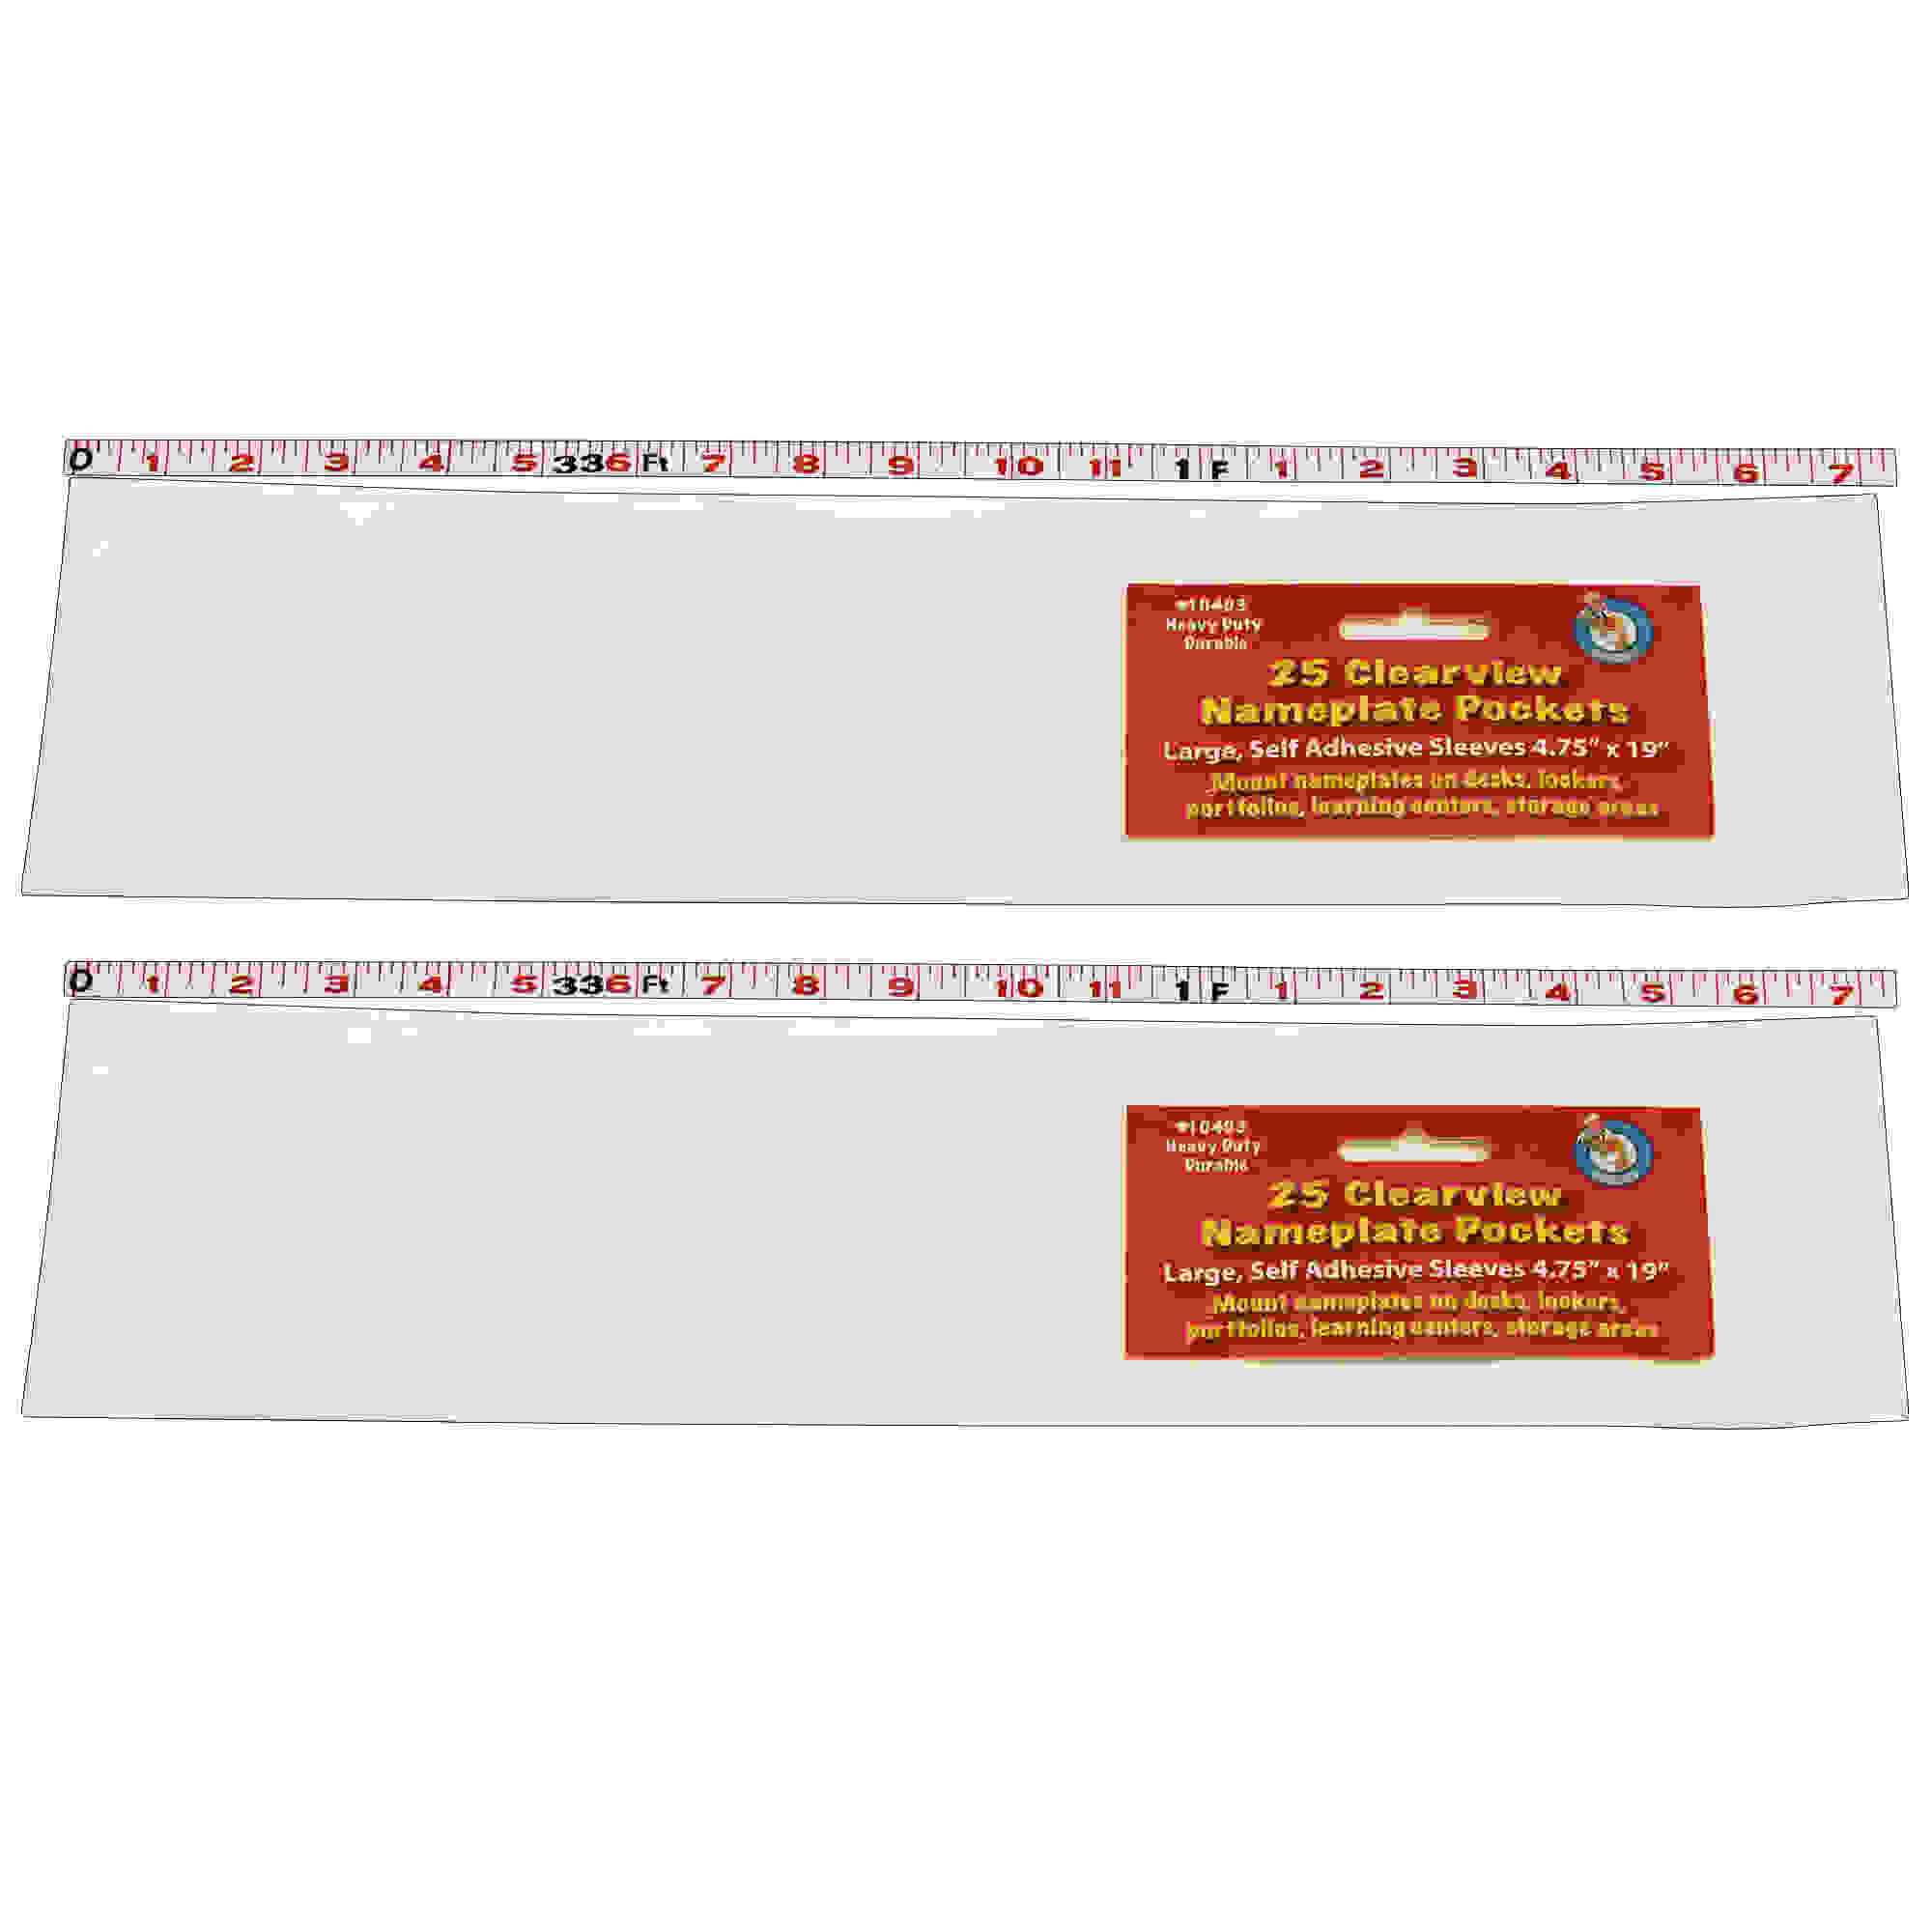 Clear View Self-Adhesive Large Name Plate Pocket 4-3/4" x 19", 25 Per Pack, 2 Packs